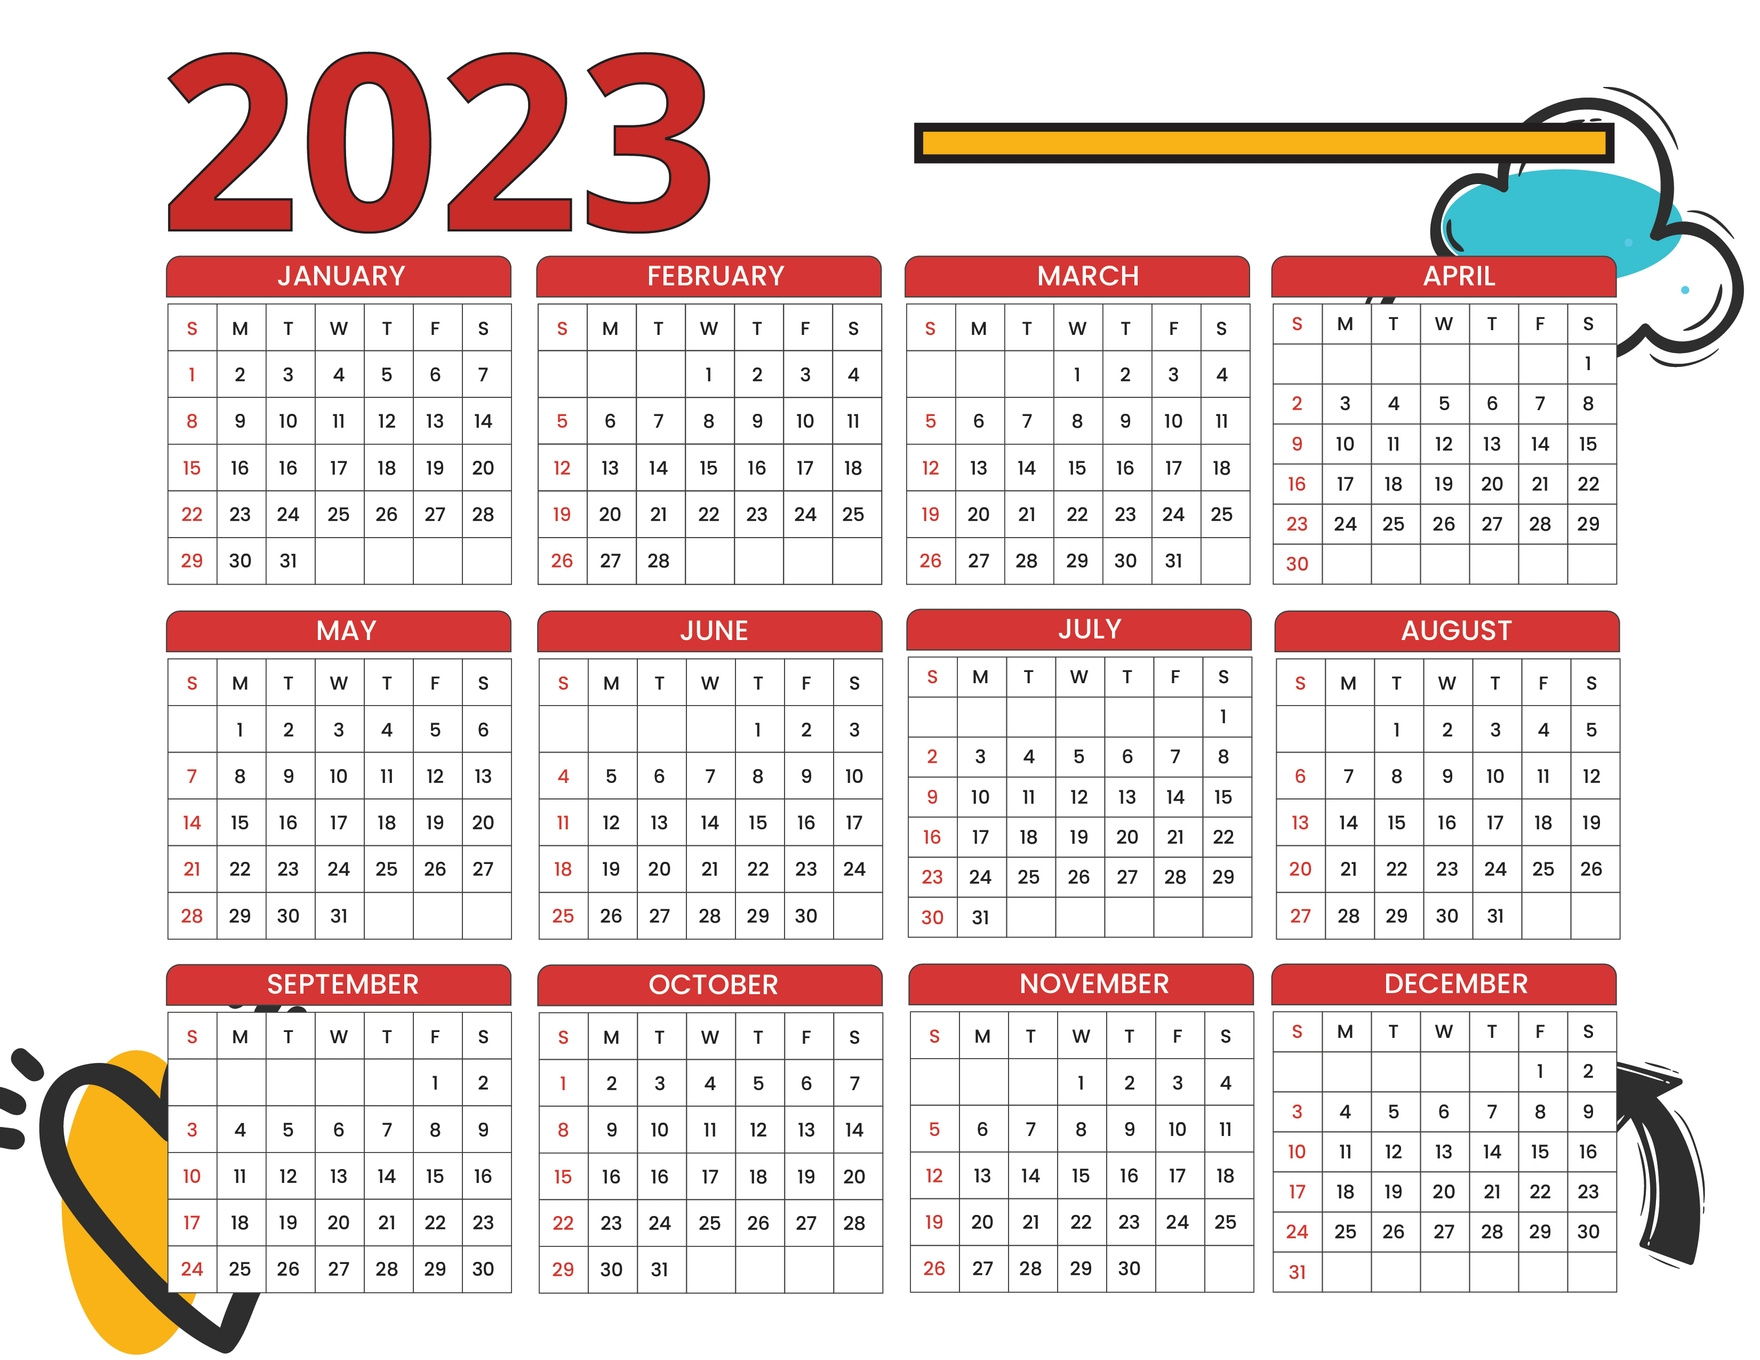 Google Sheets 2023 Calendar Template 2023 Holidays